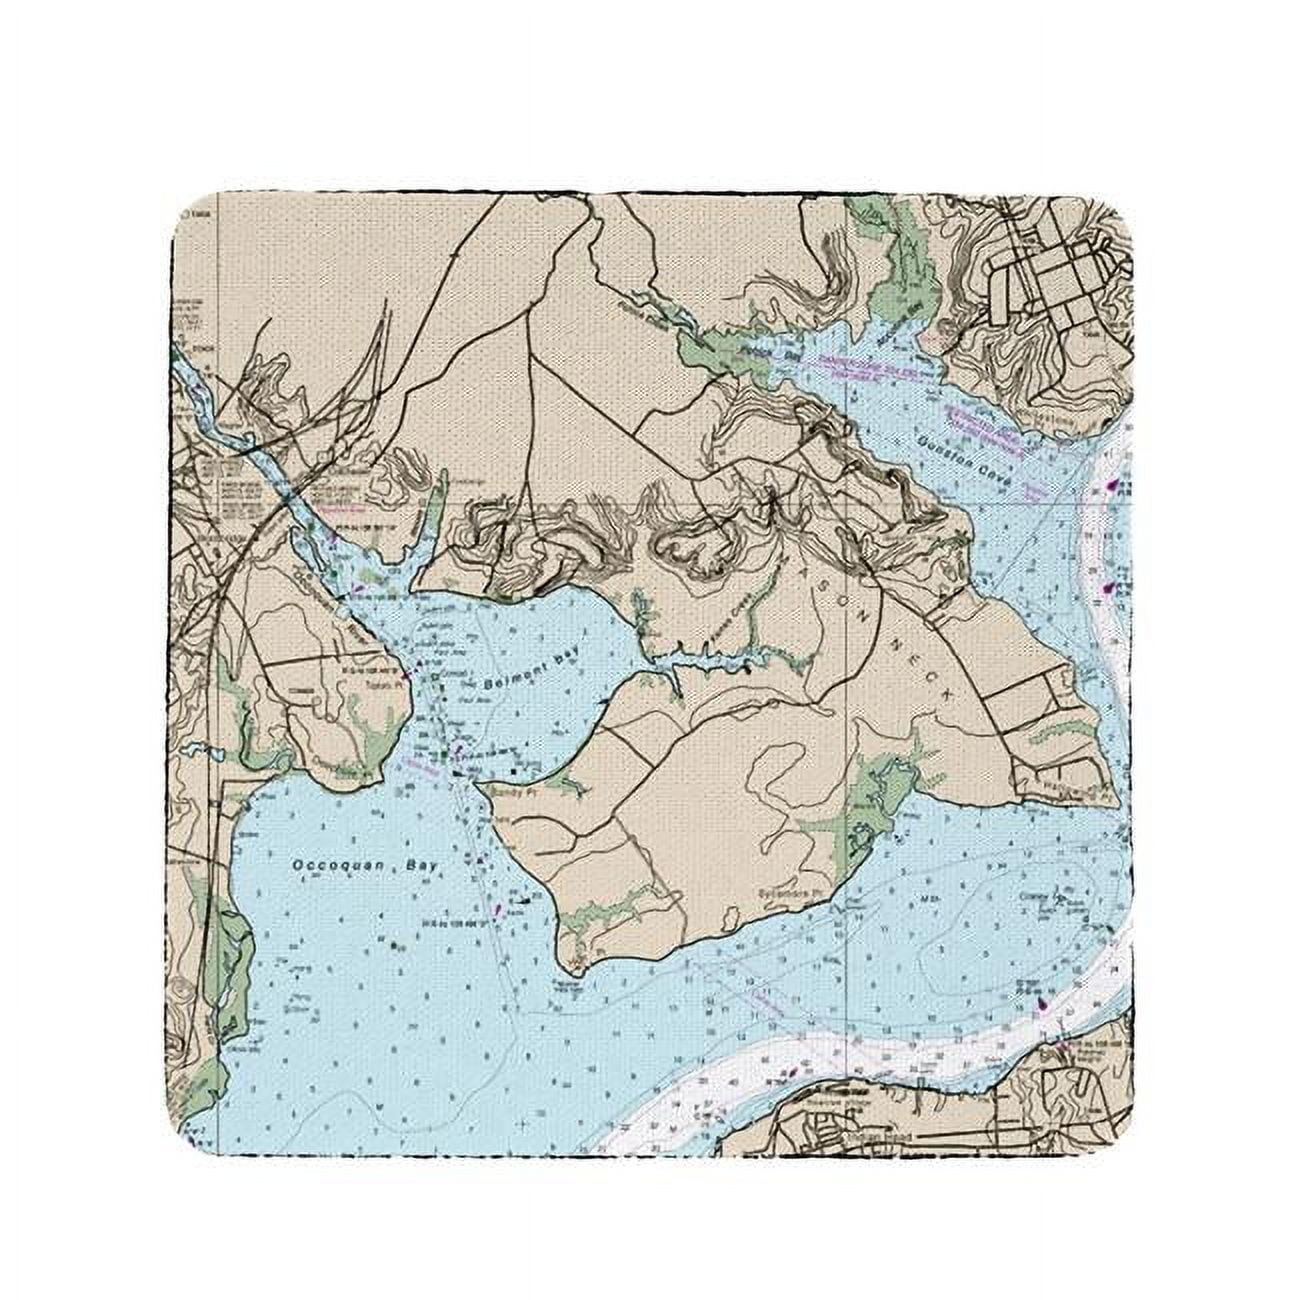 Ct12289oc 4 X 4 In. Occoquan, Va Nautical Map Coaster - Set Of 4